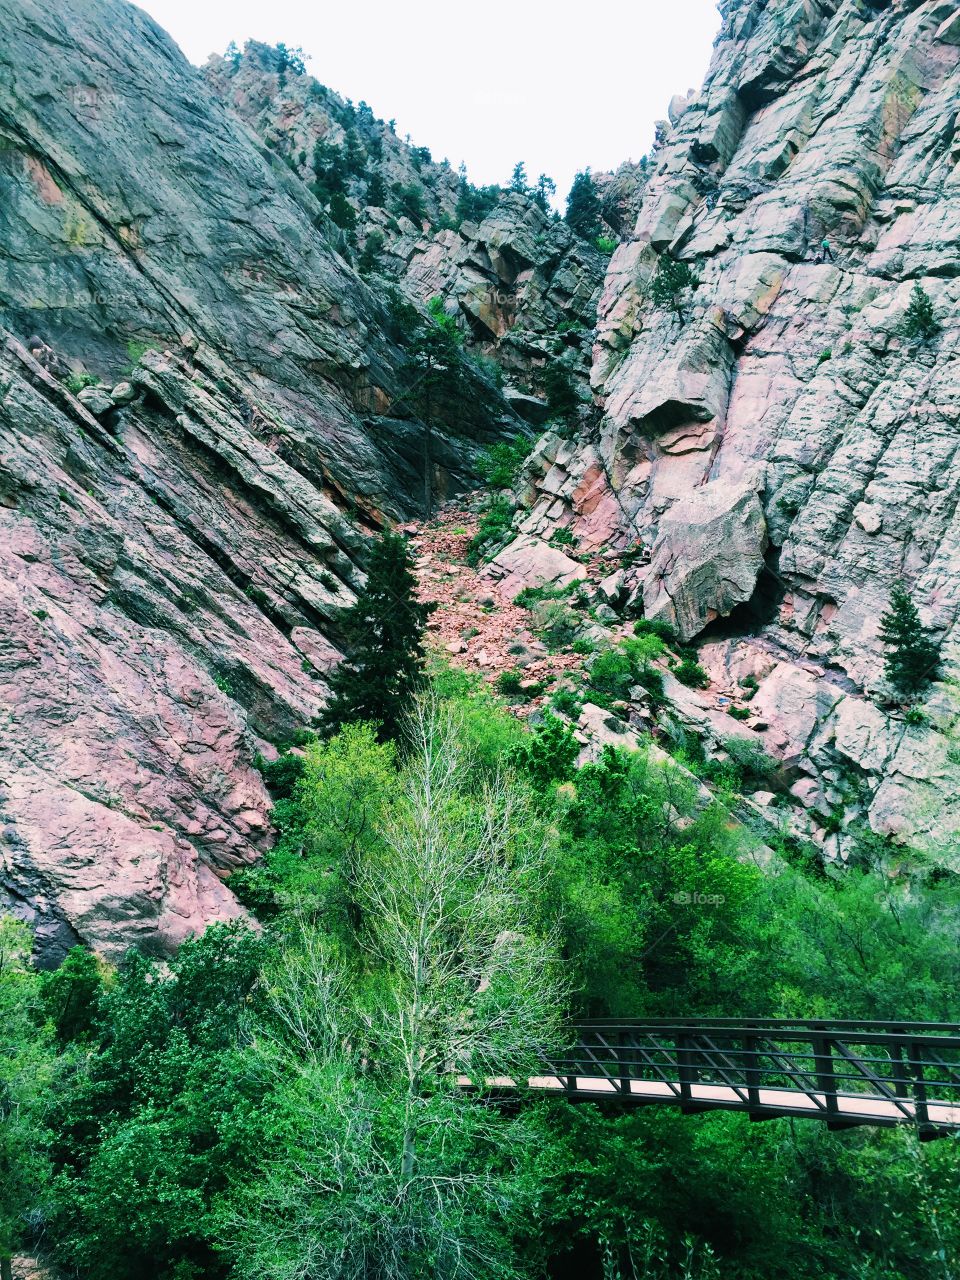 Bridge near the rocky mountain